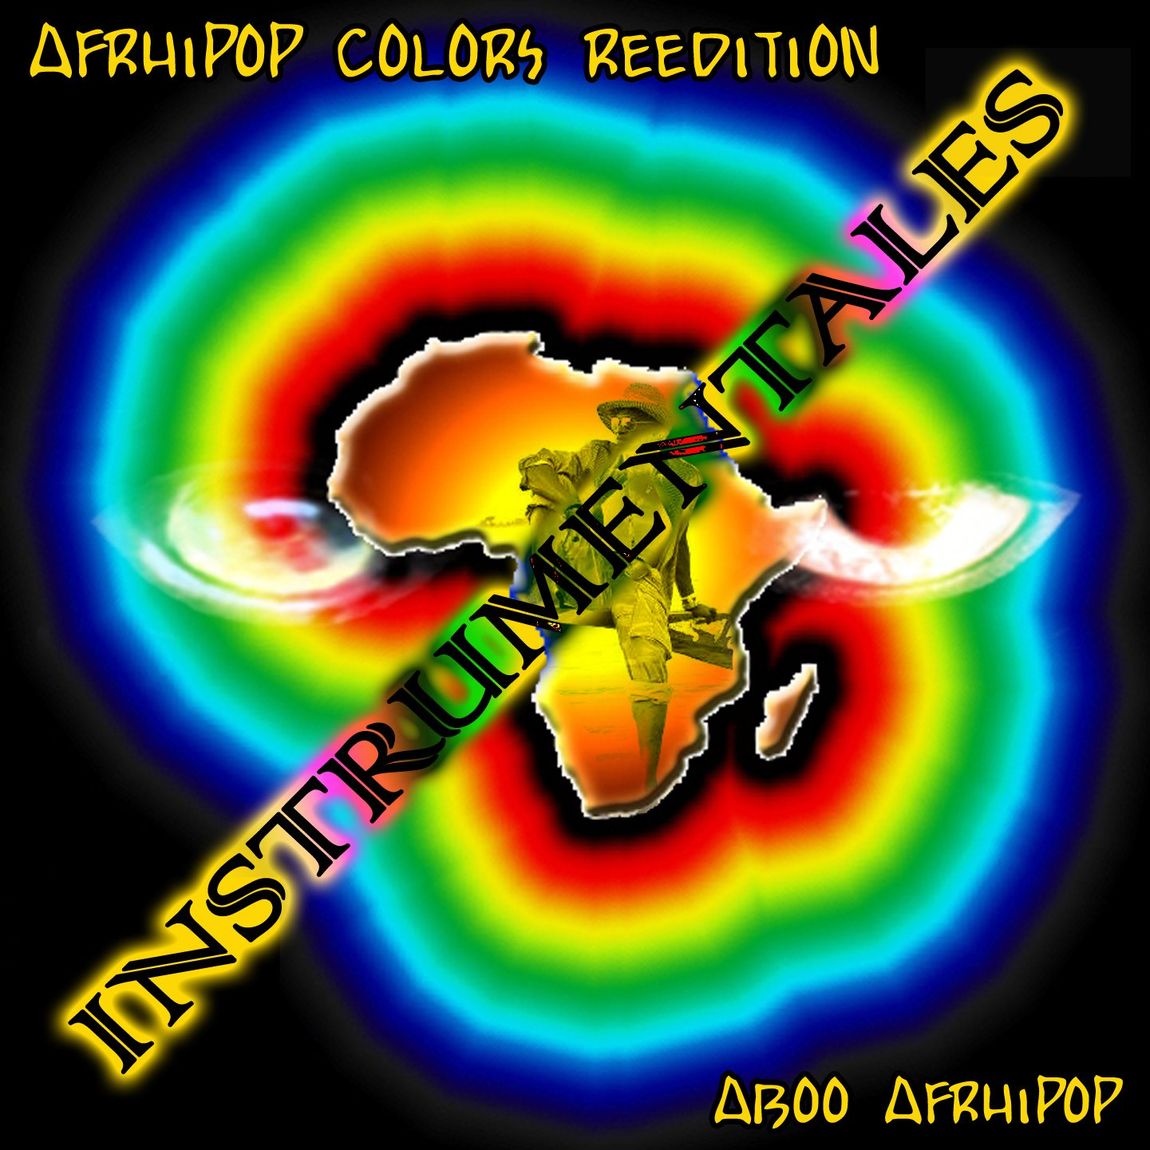 Visuel Pochette Album Afrhipop Colors version Instrumentale de l'Artiste Aboo AfrHipoP